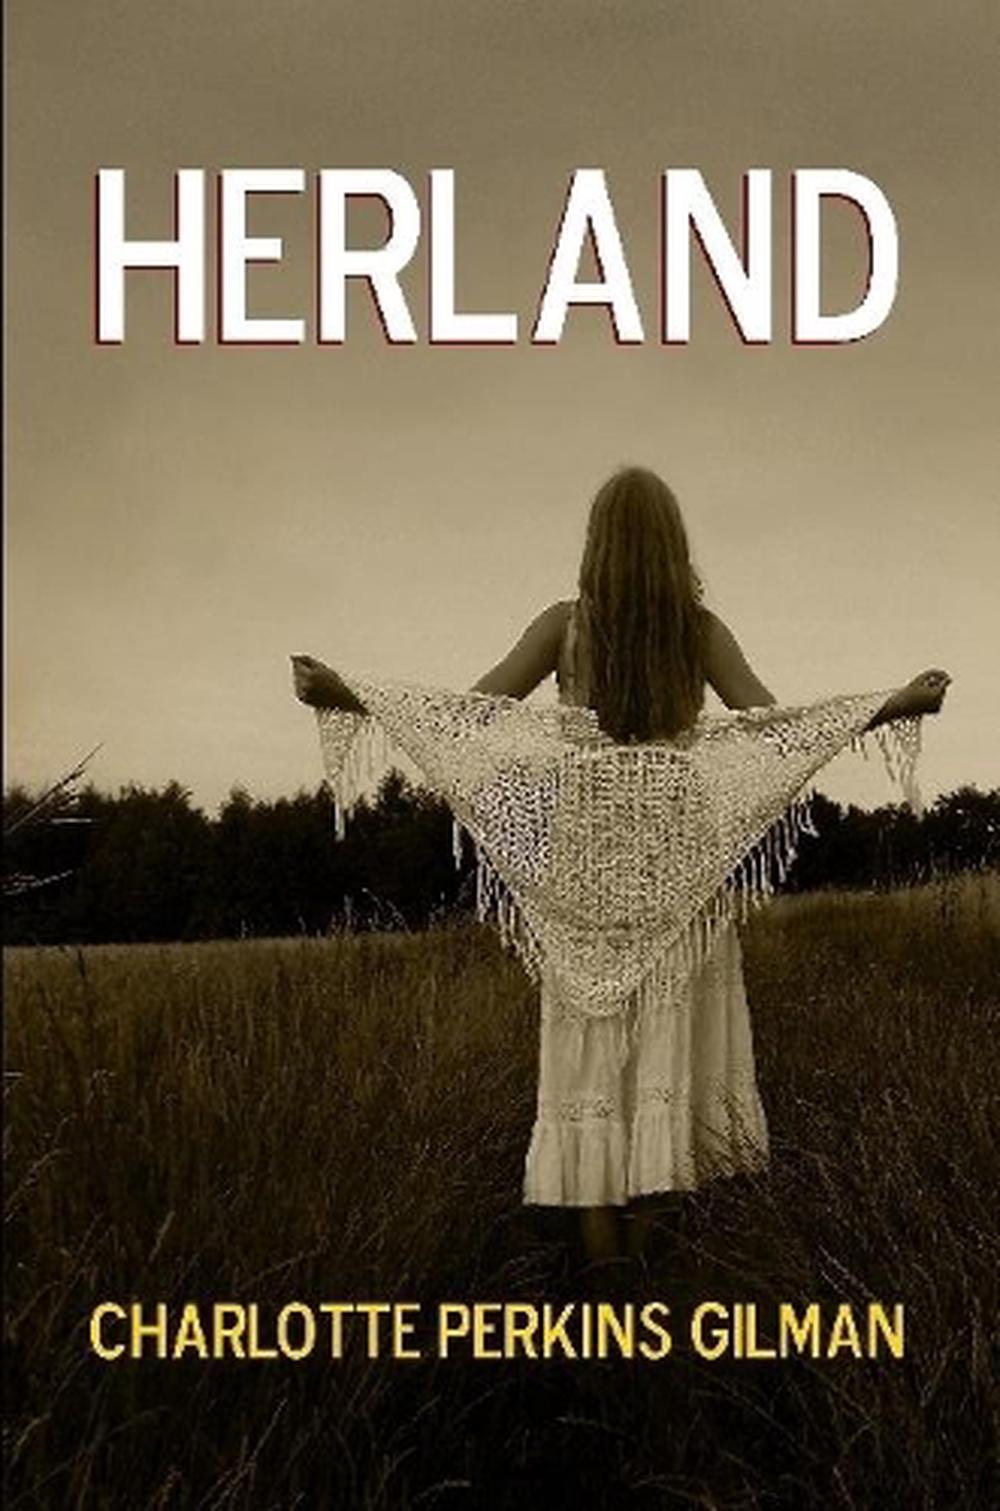 book herland